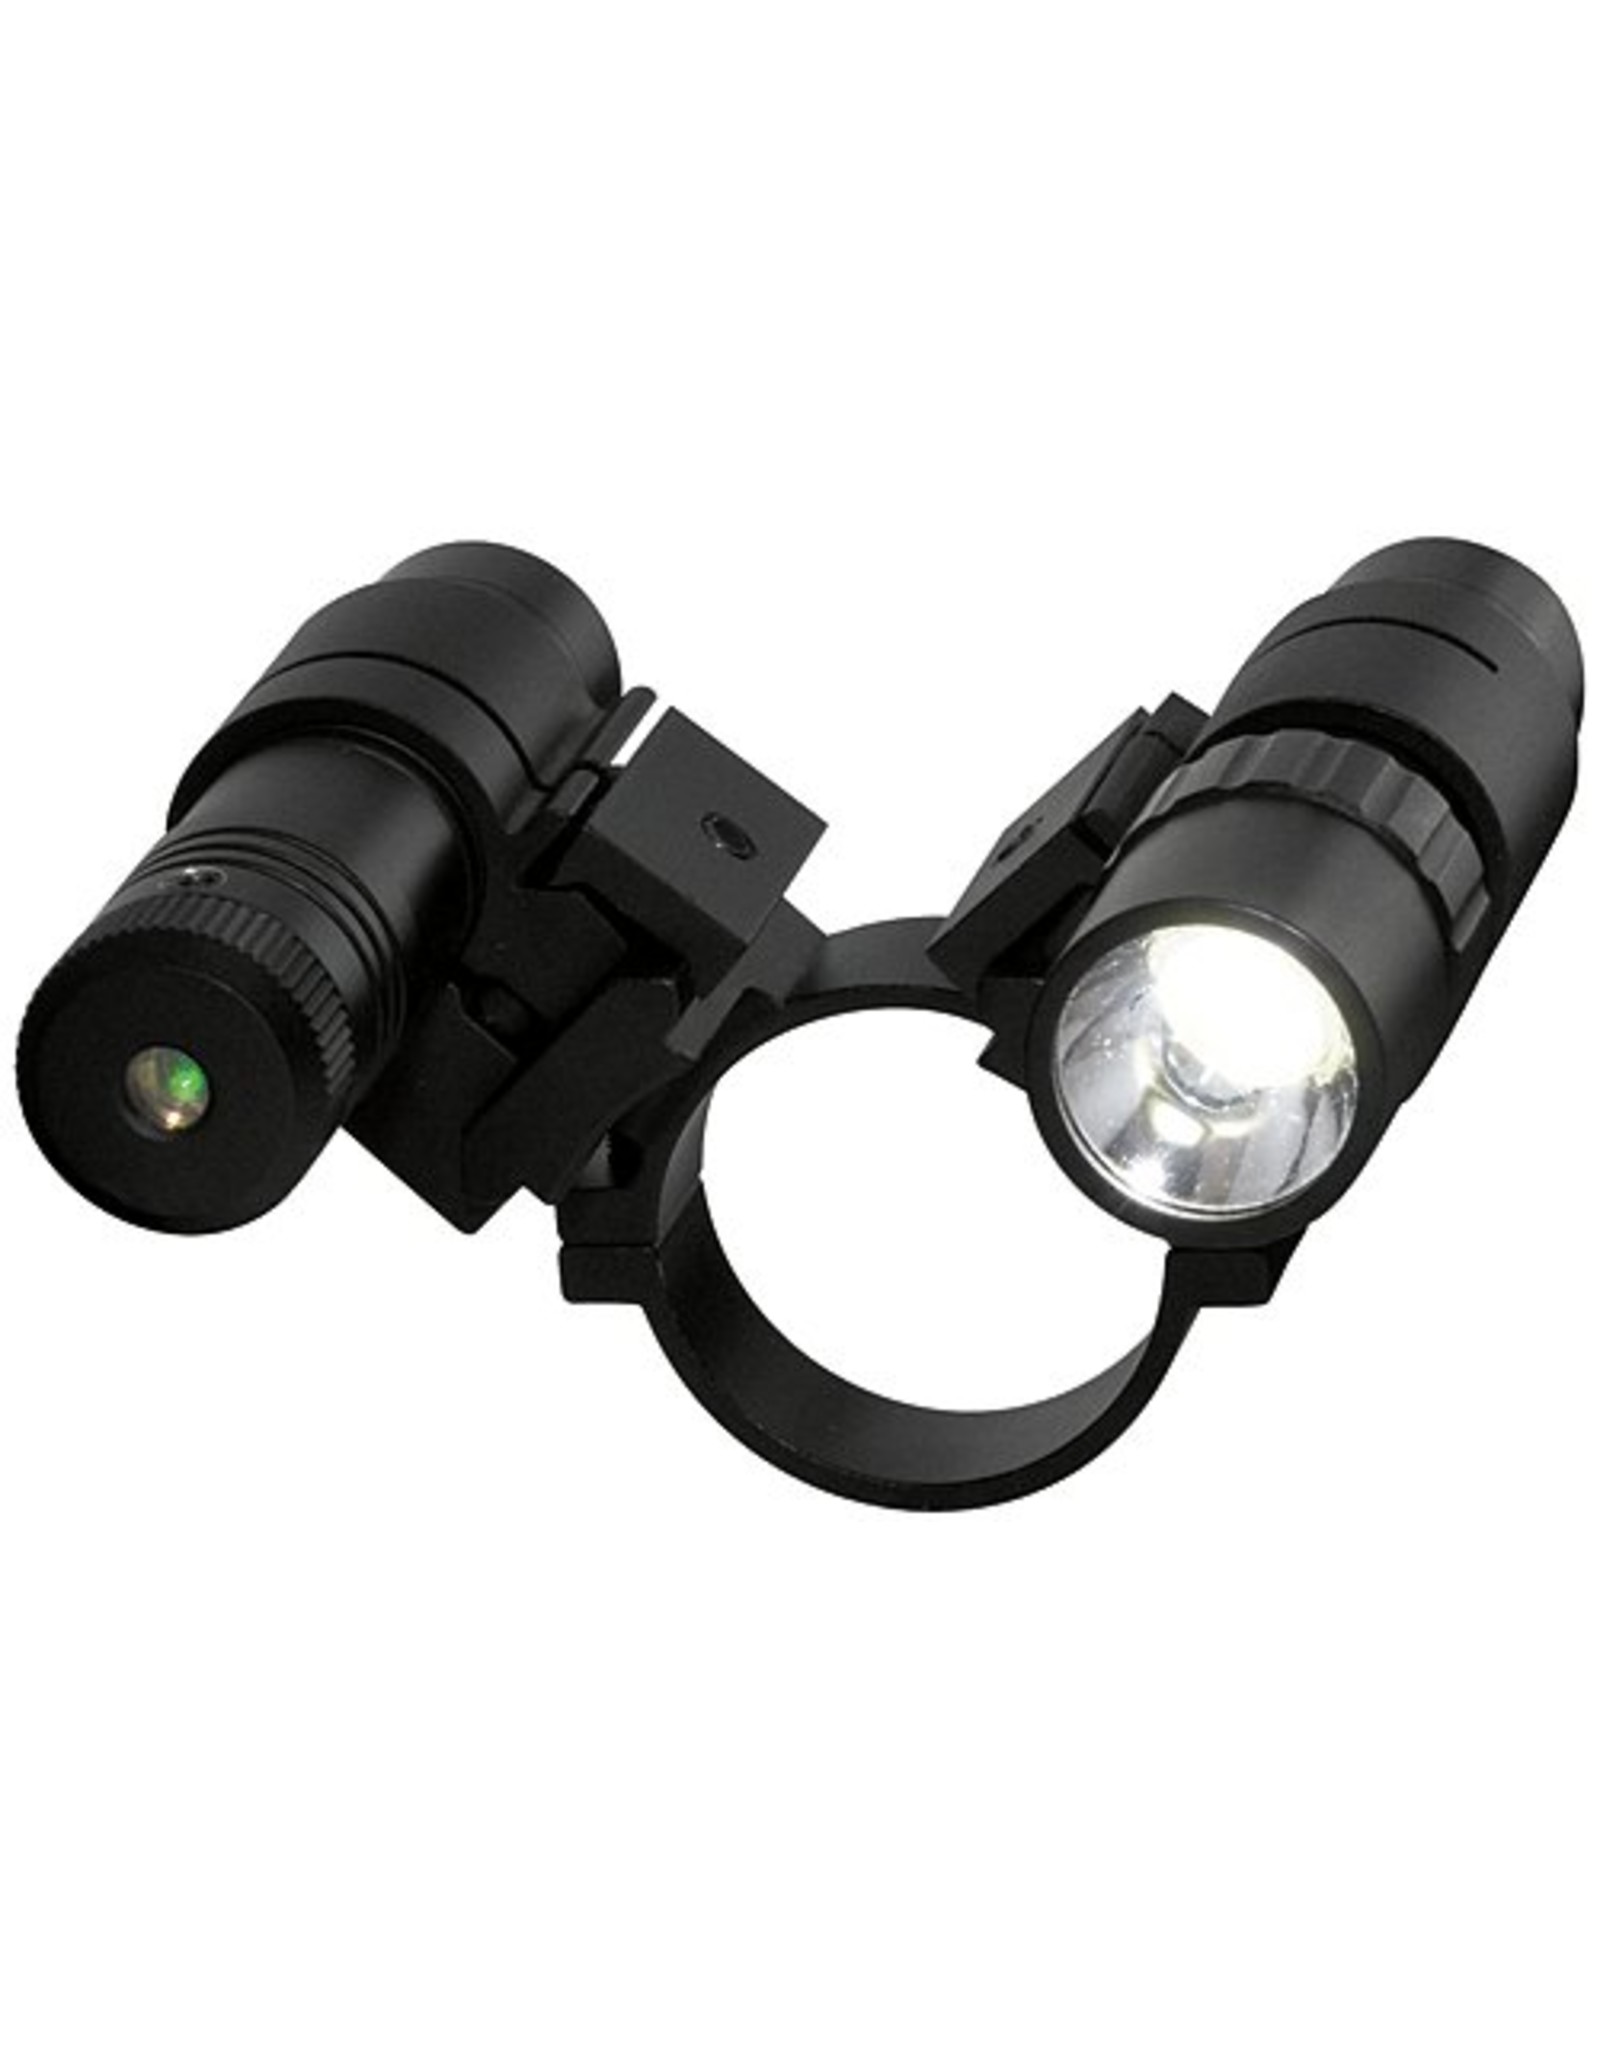 NcStar Mark III tactical scope adapter/flashlight/green laser set